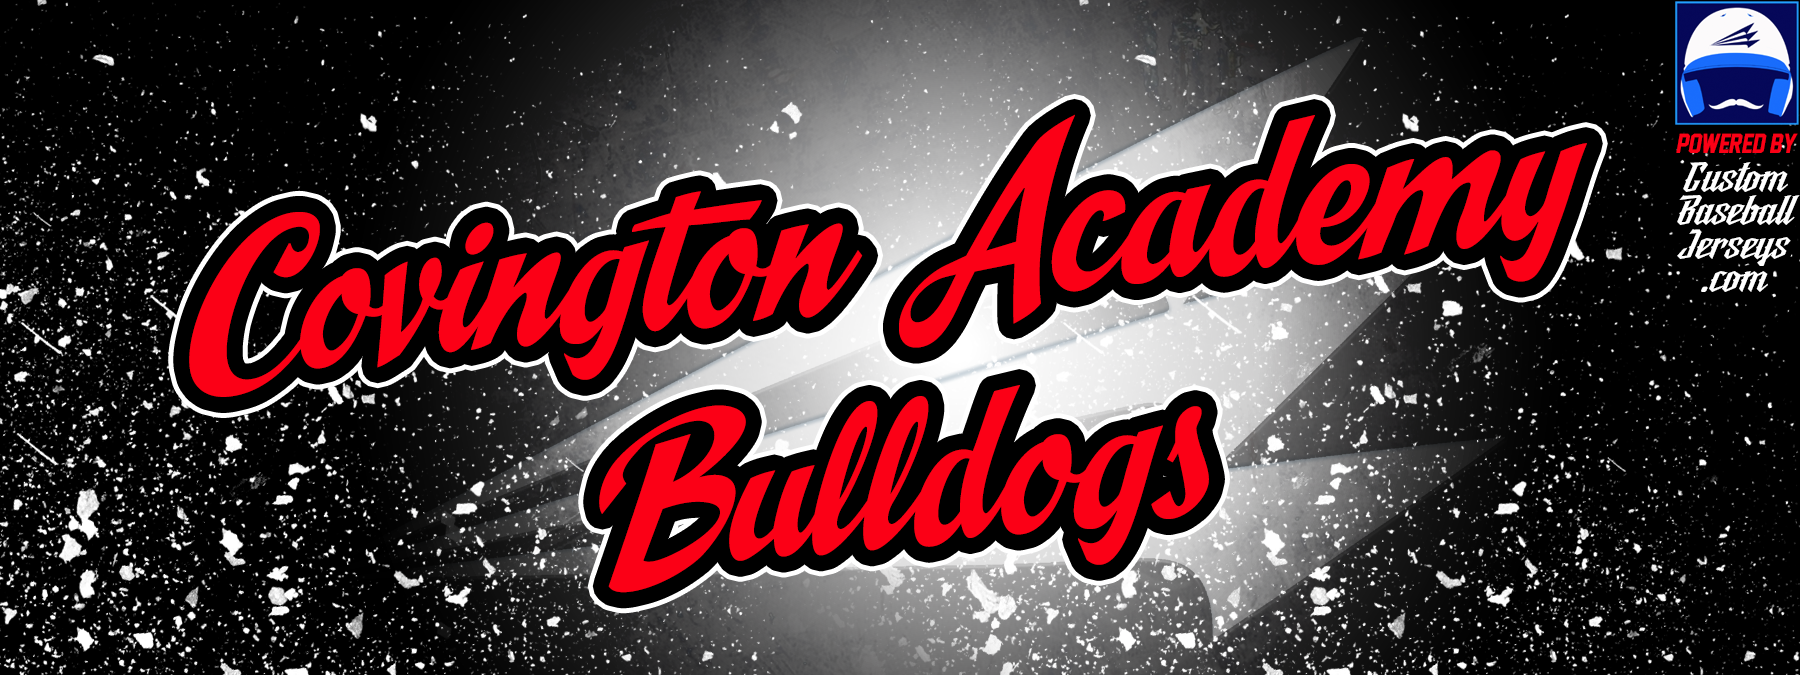 Covington Academy Bulldogs Custom Modern Baseball Jerseys